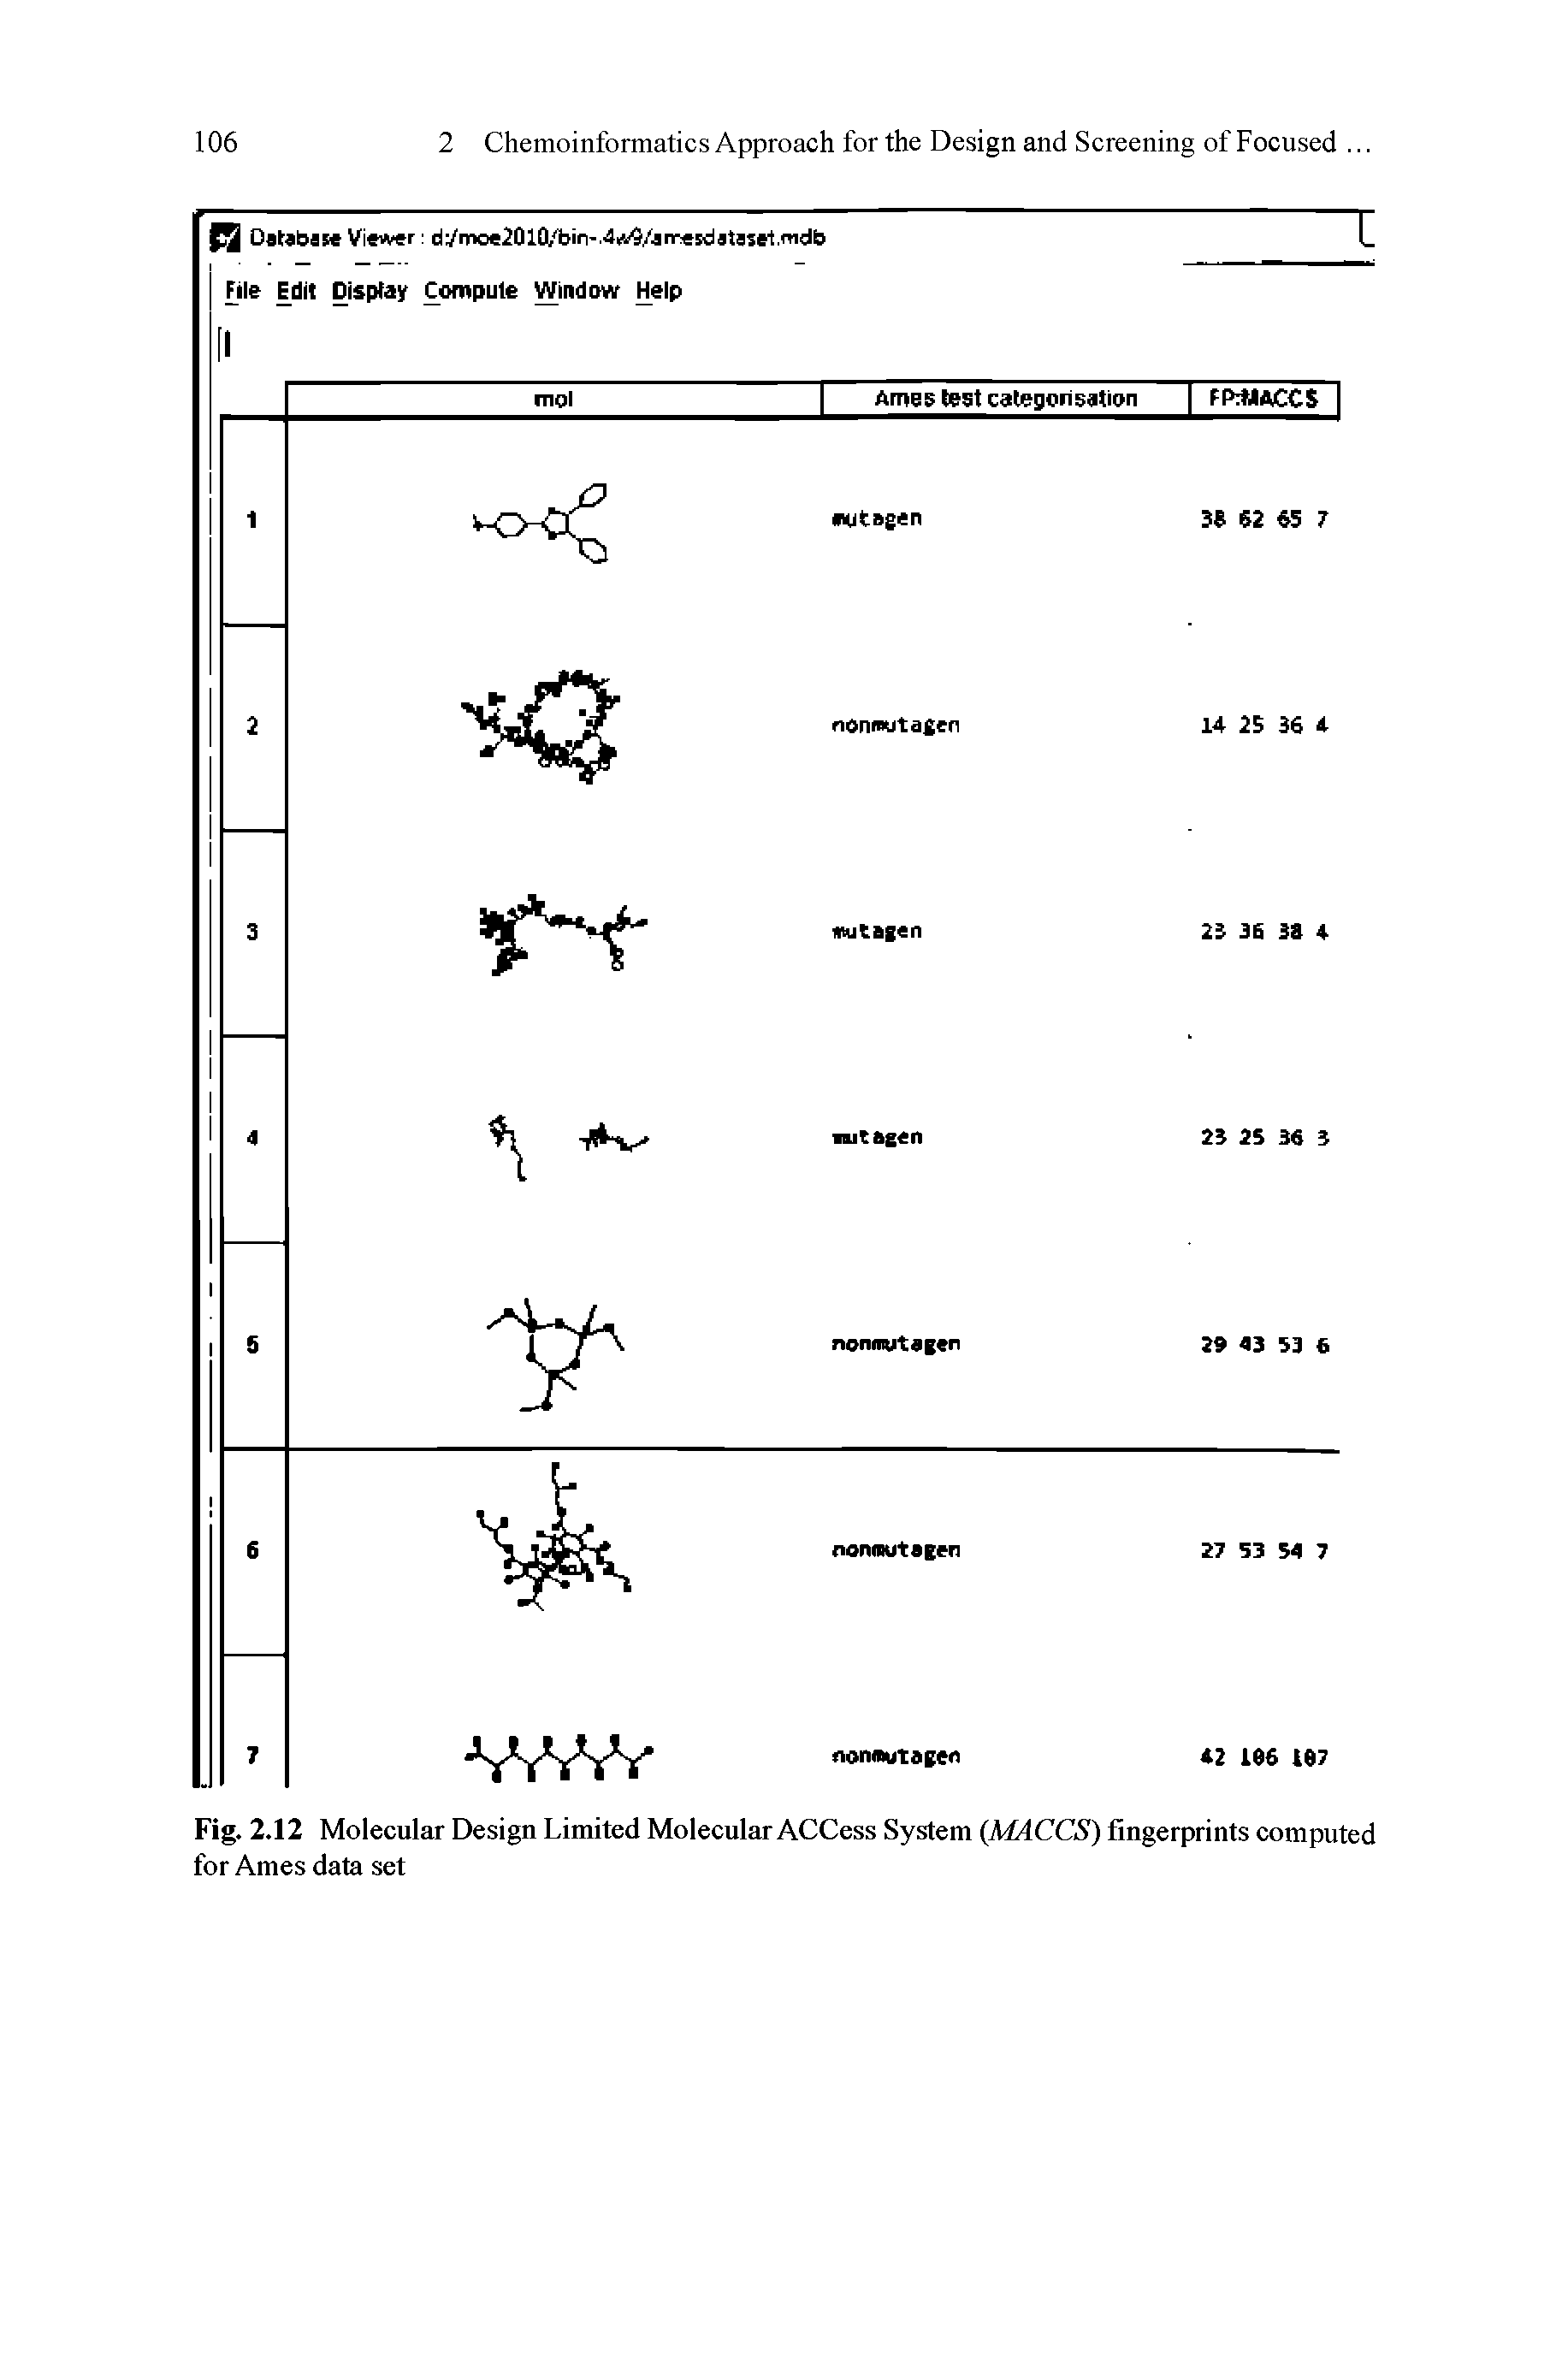 Fig. 2.12 Molecular Design Limited Molecular ACCess System (MACCS) fingerprints computed for Ames data set...